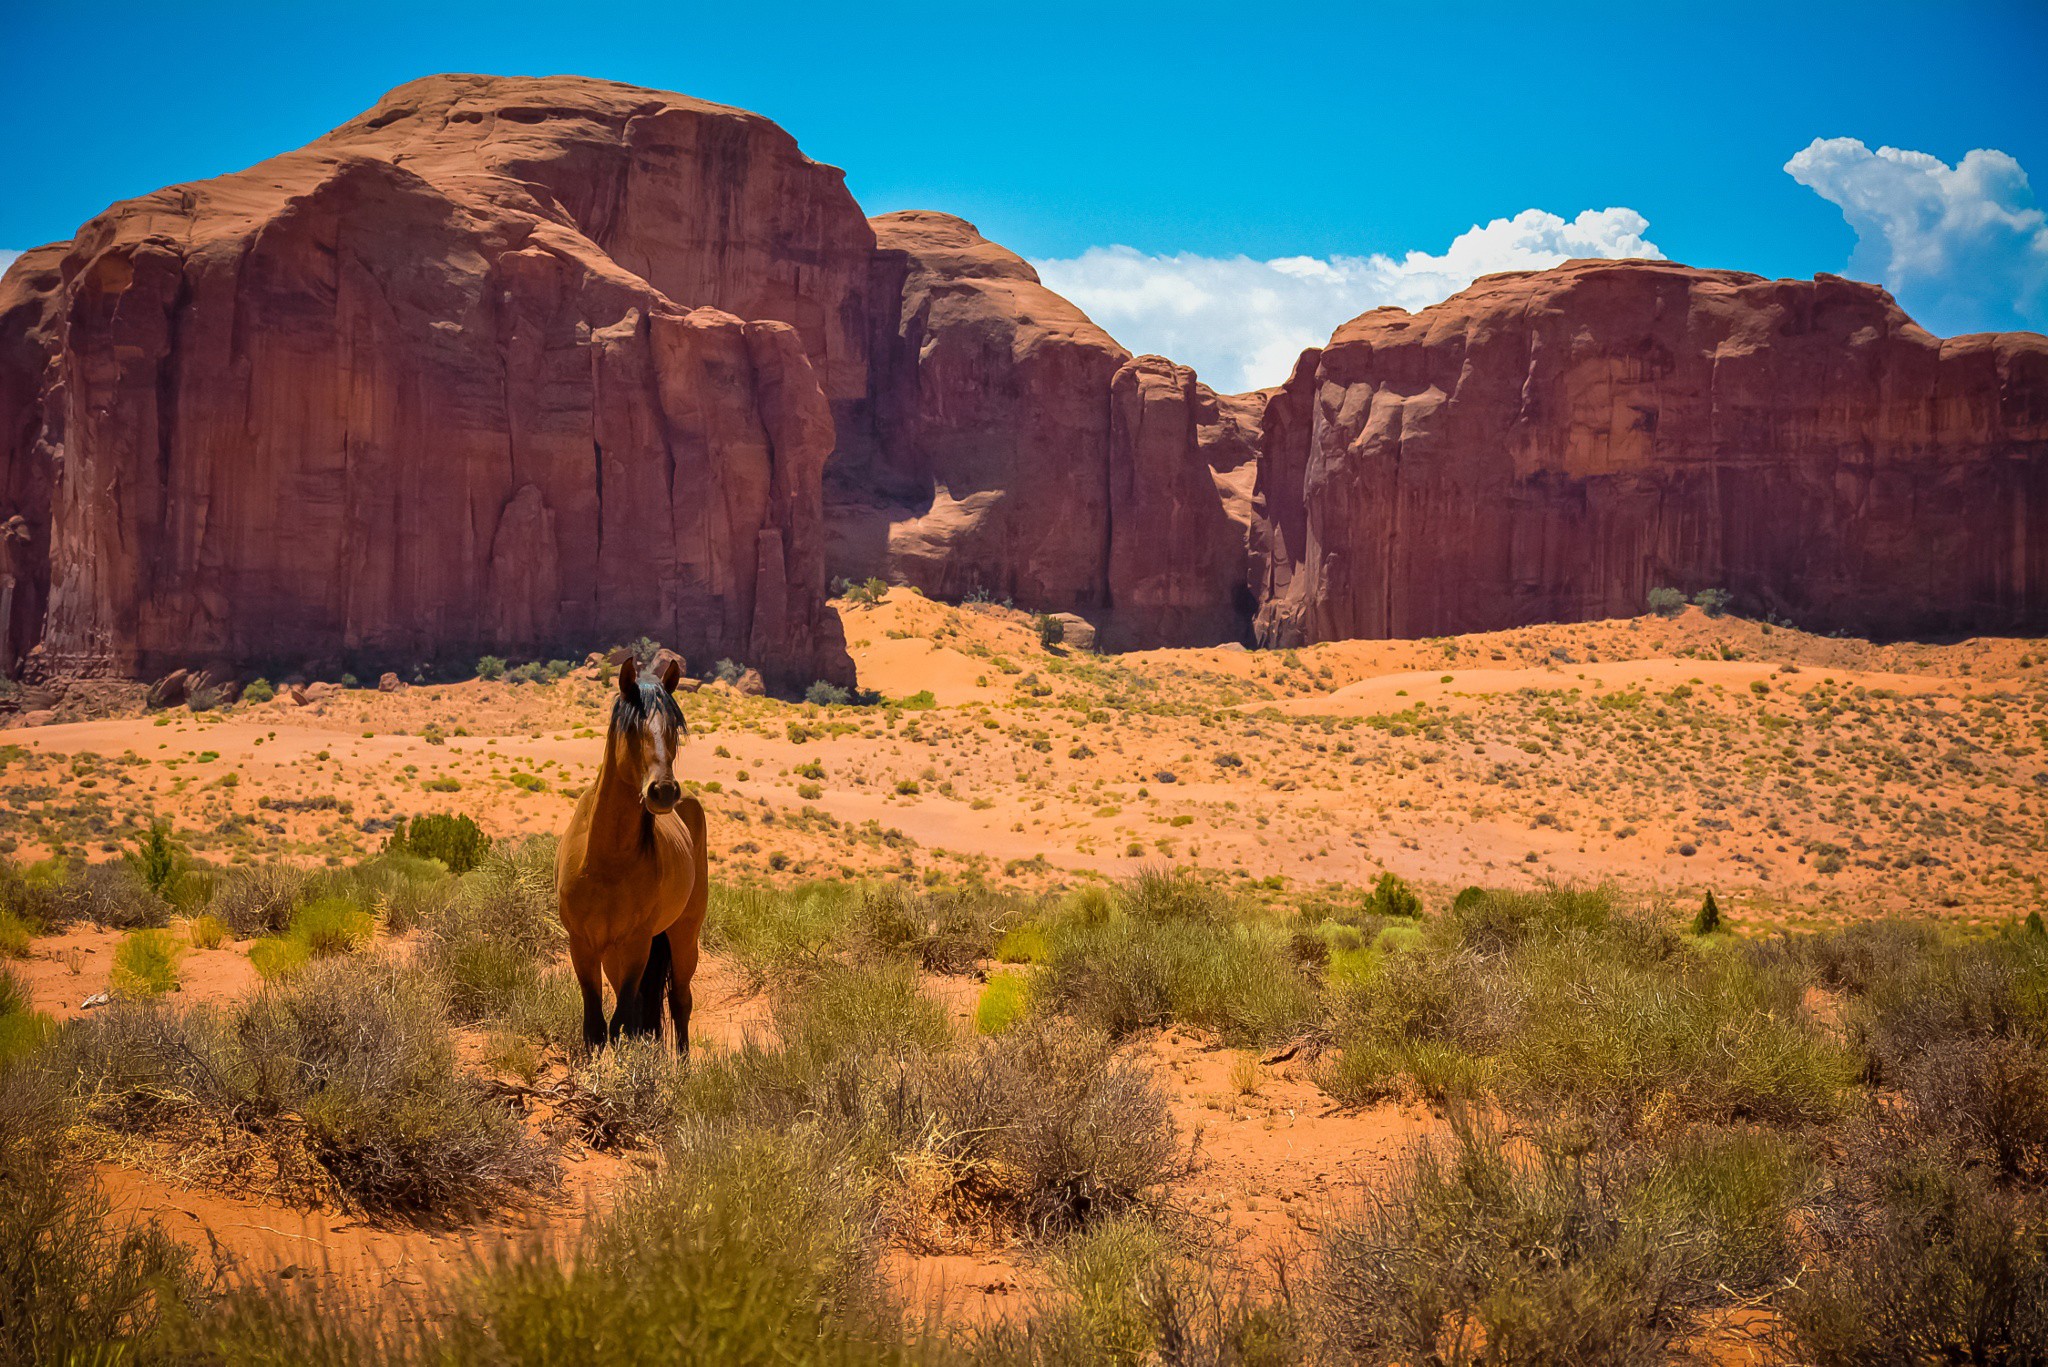 General 2048x1367 nature sandstone horse desert landscape animals mammals plants rocks